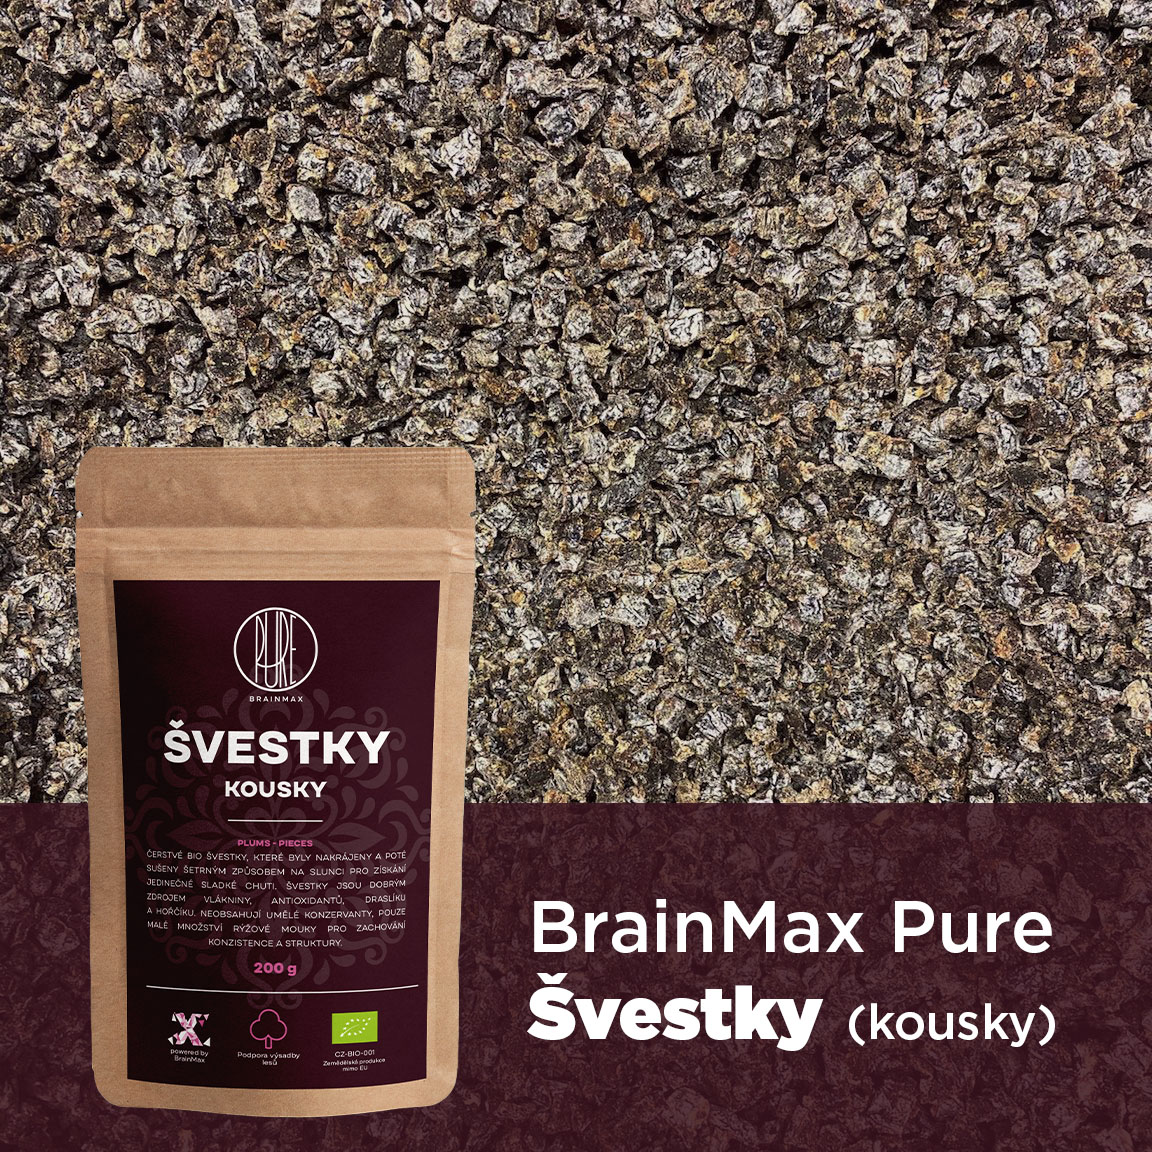 BrainMax Pure Švestky - BrainMarket.cz